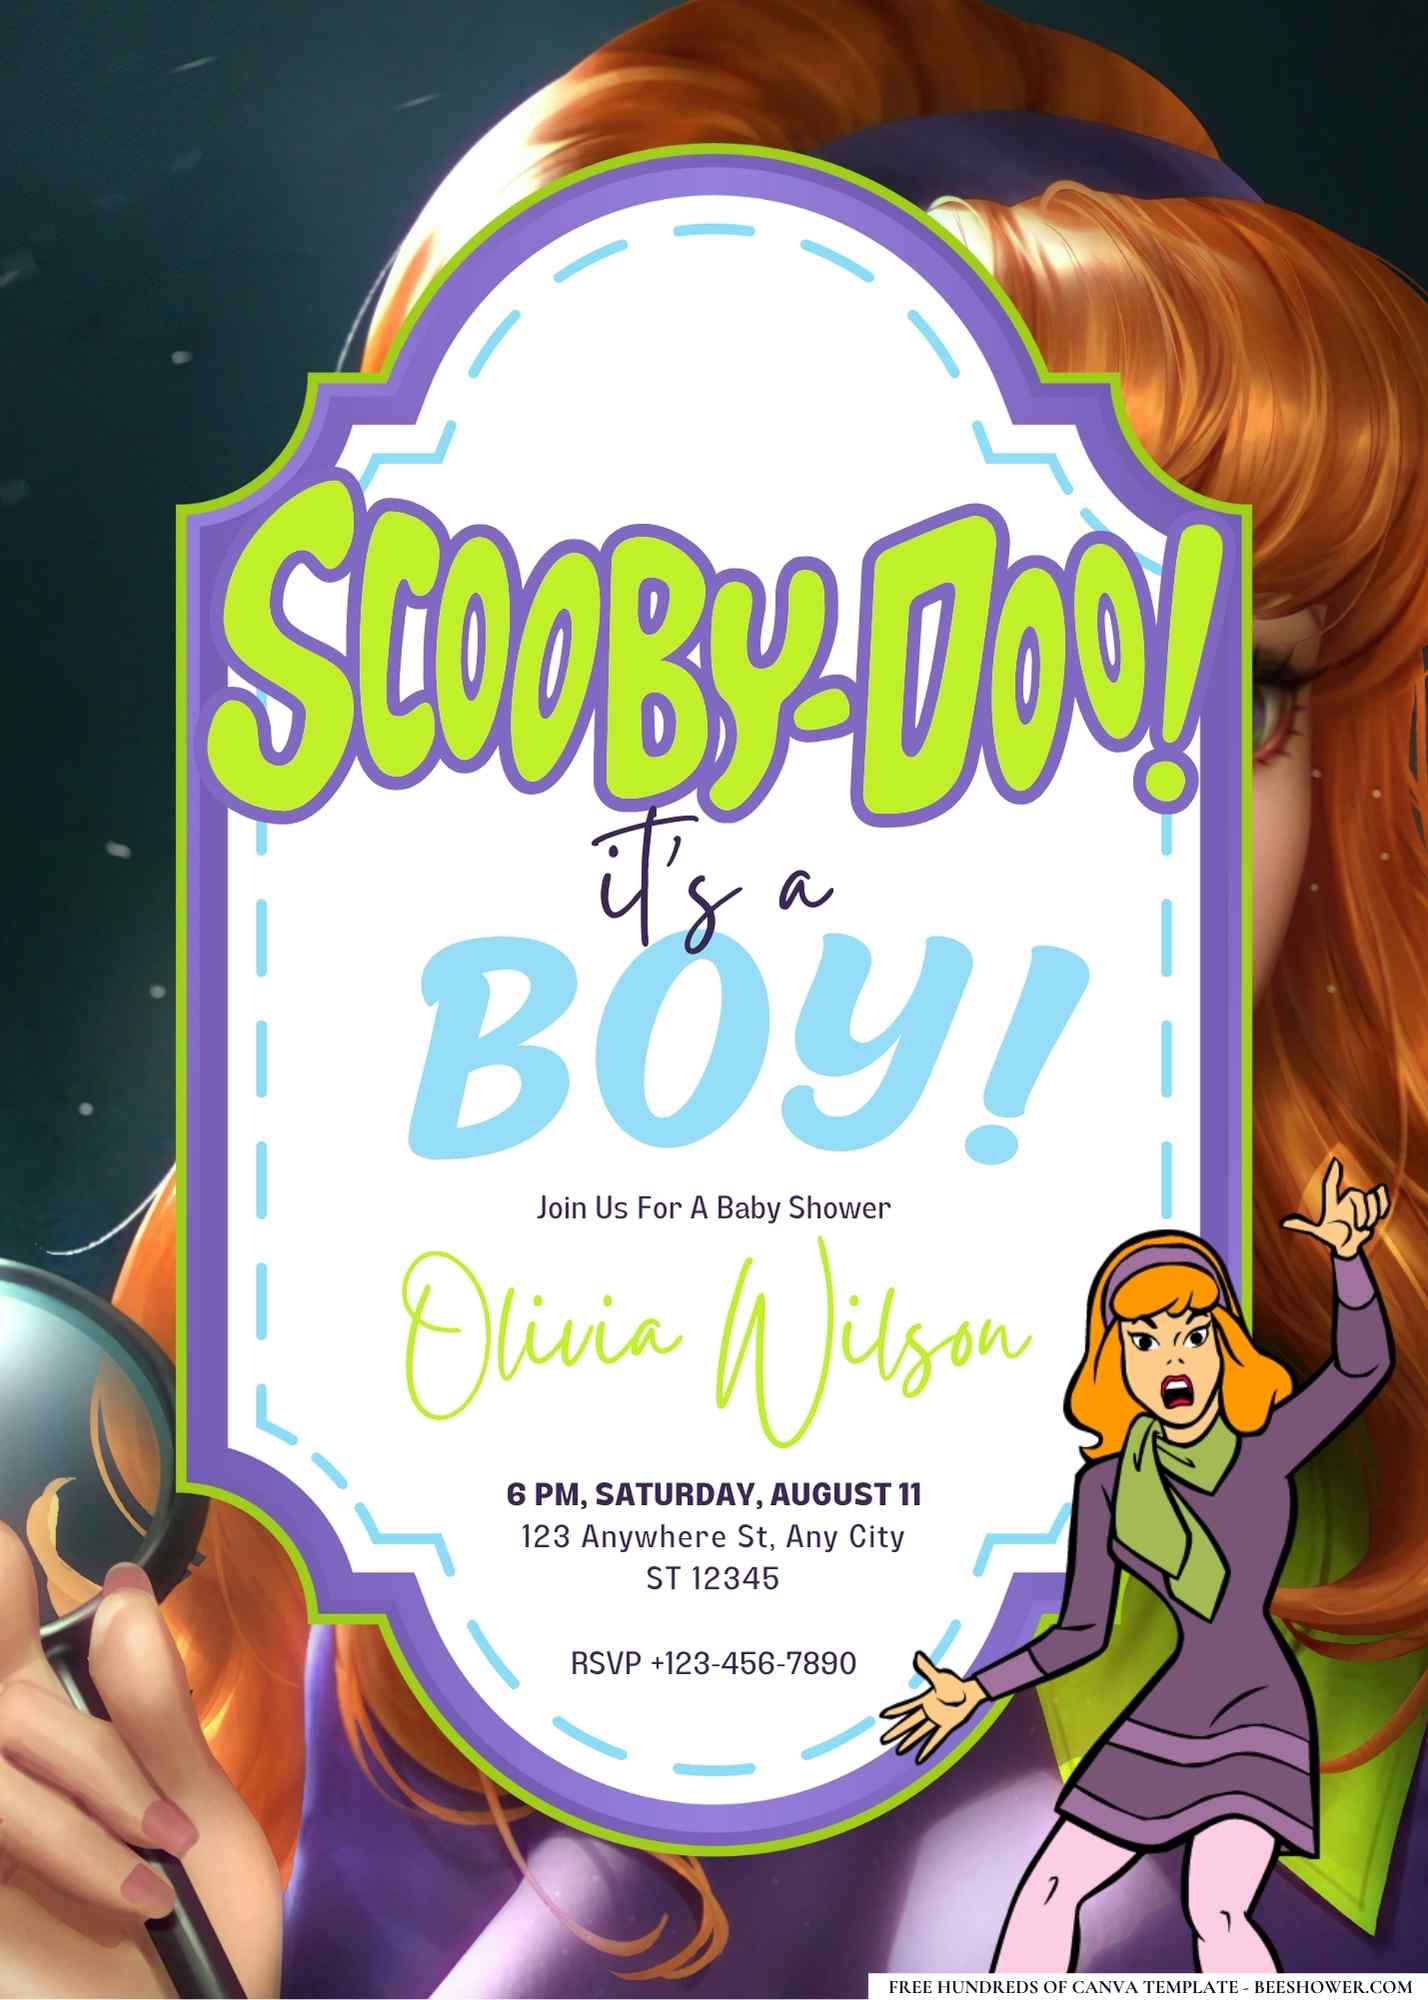 Daphne (Scooby-Doo) Baby Shower Invitation